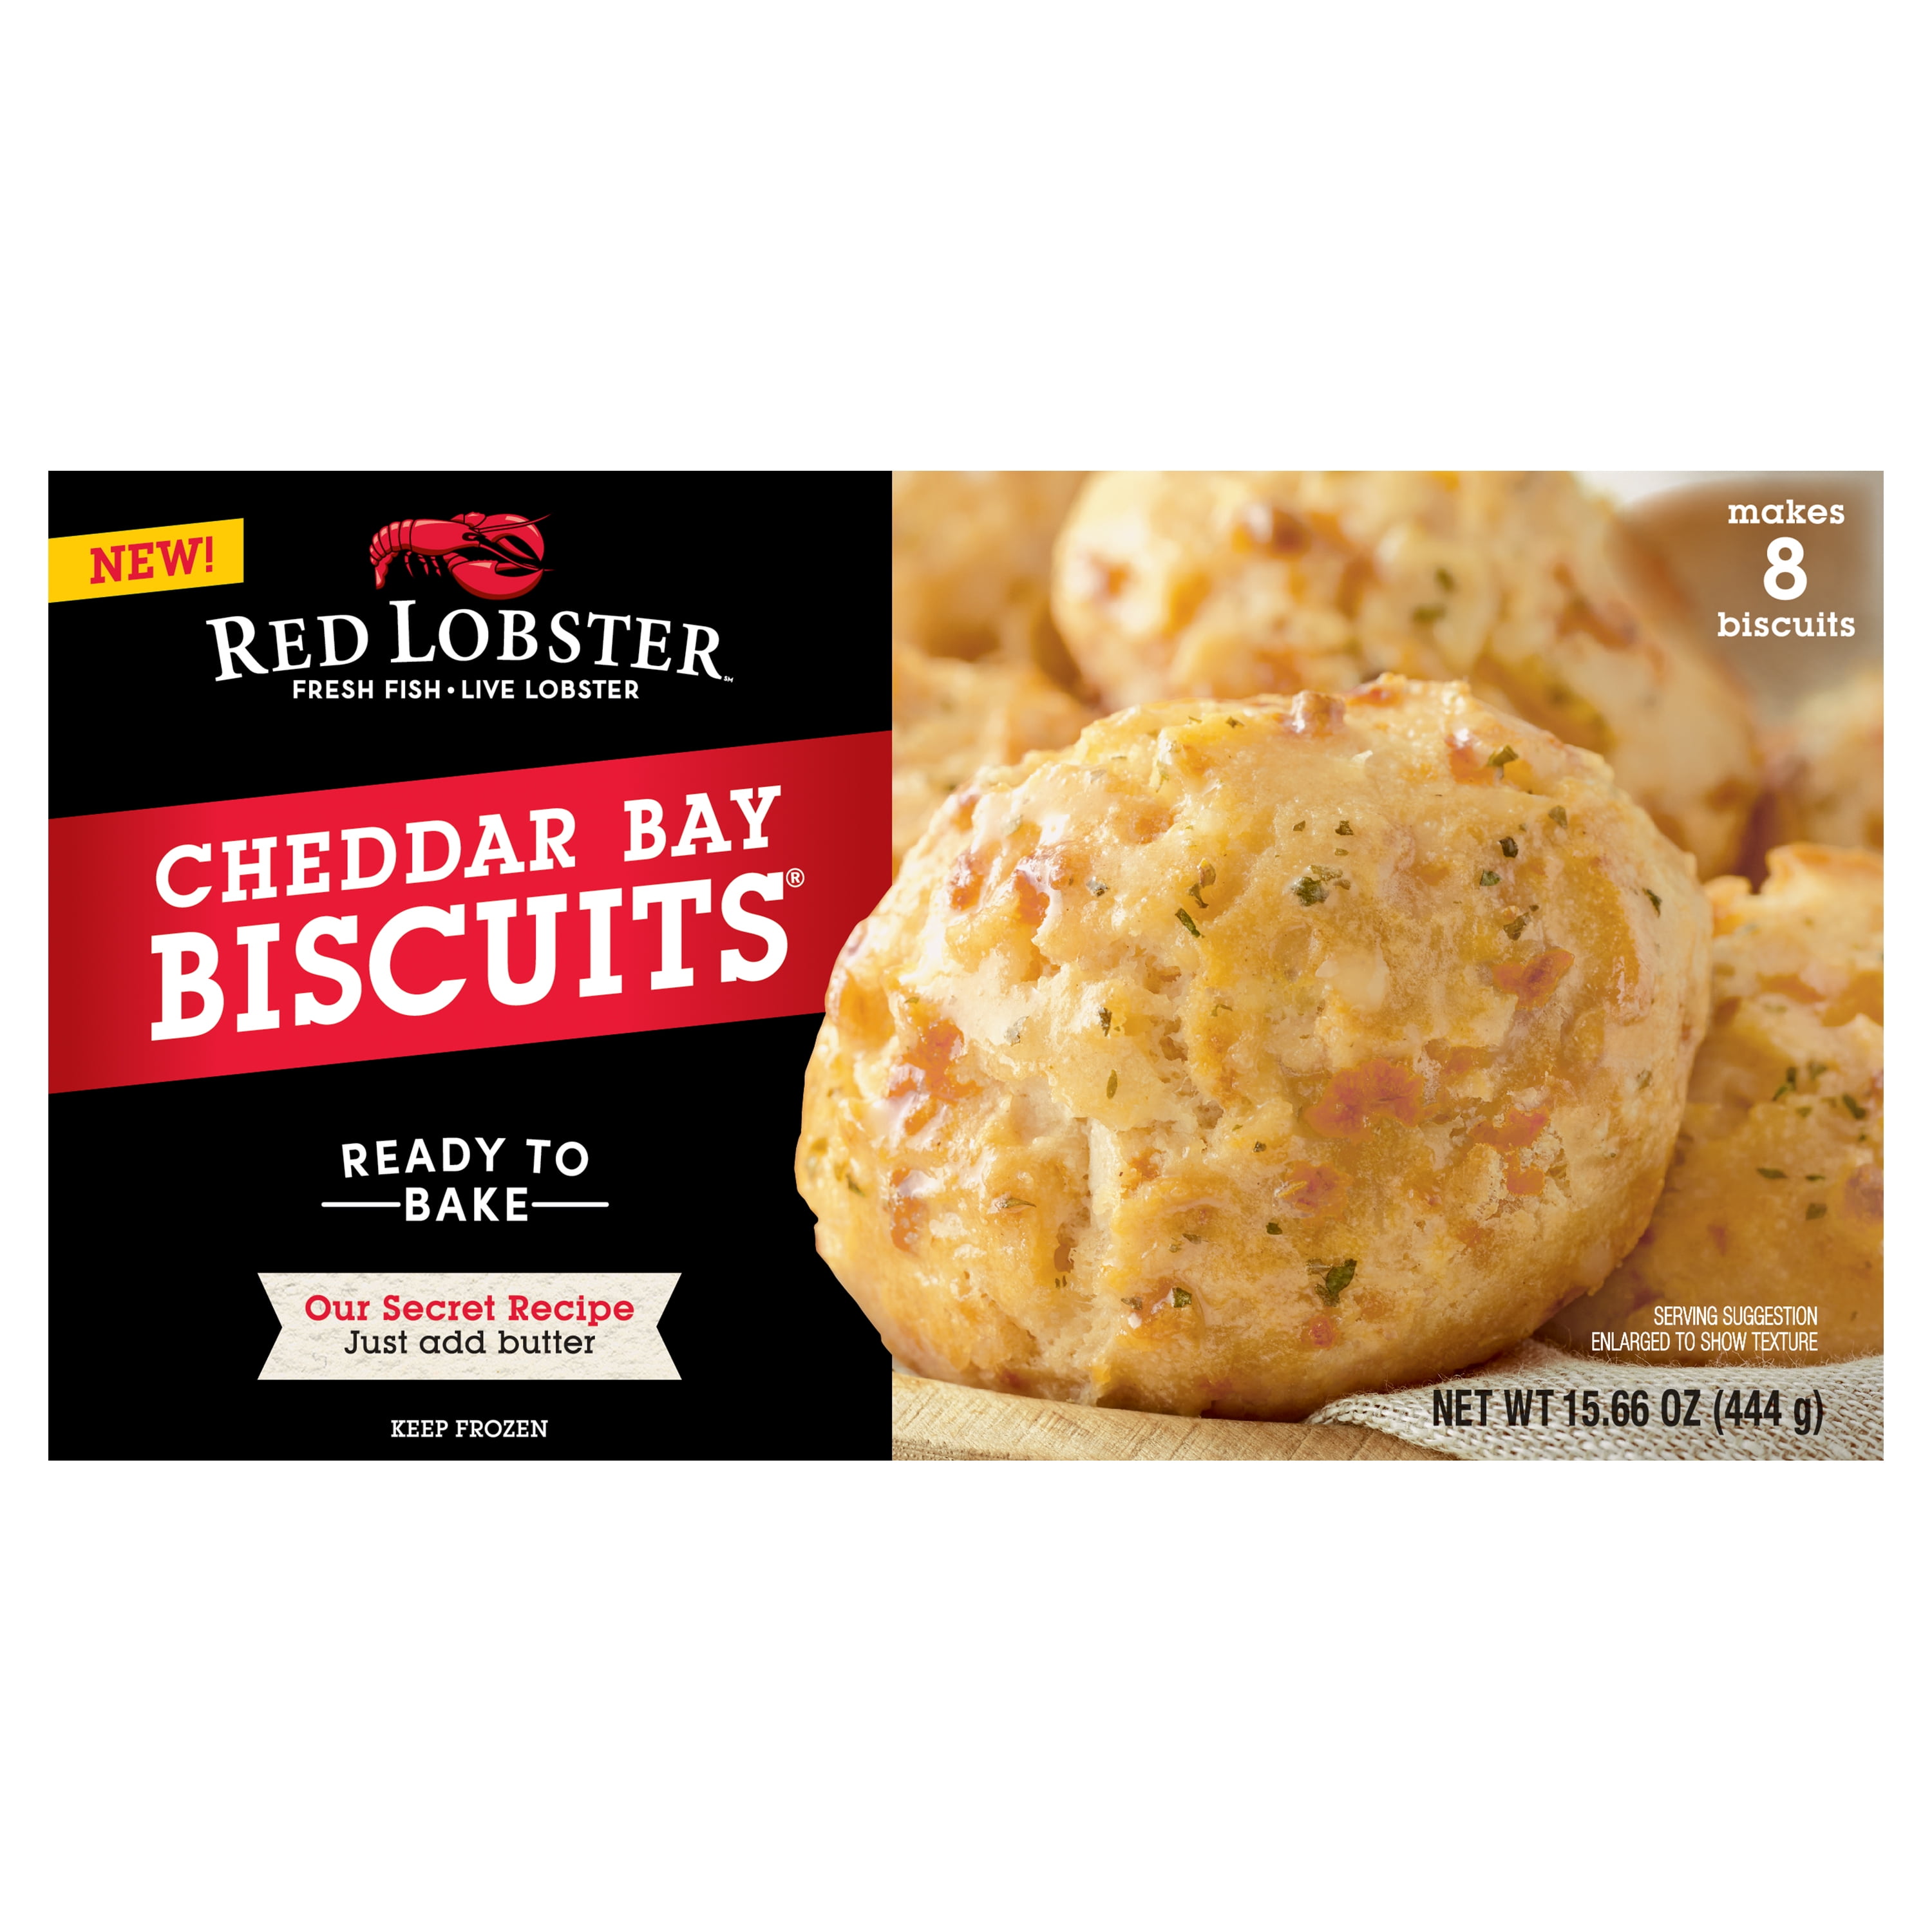 Red Lobster™ Cheddar Bay Biscuit® Mix, 11.36 oz - Pick 'n Save